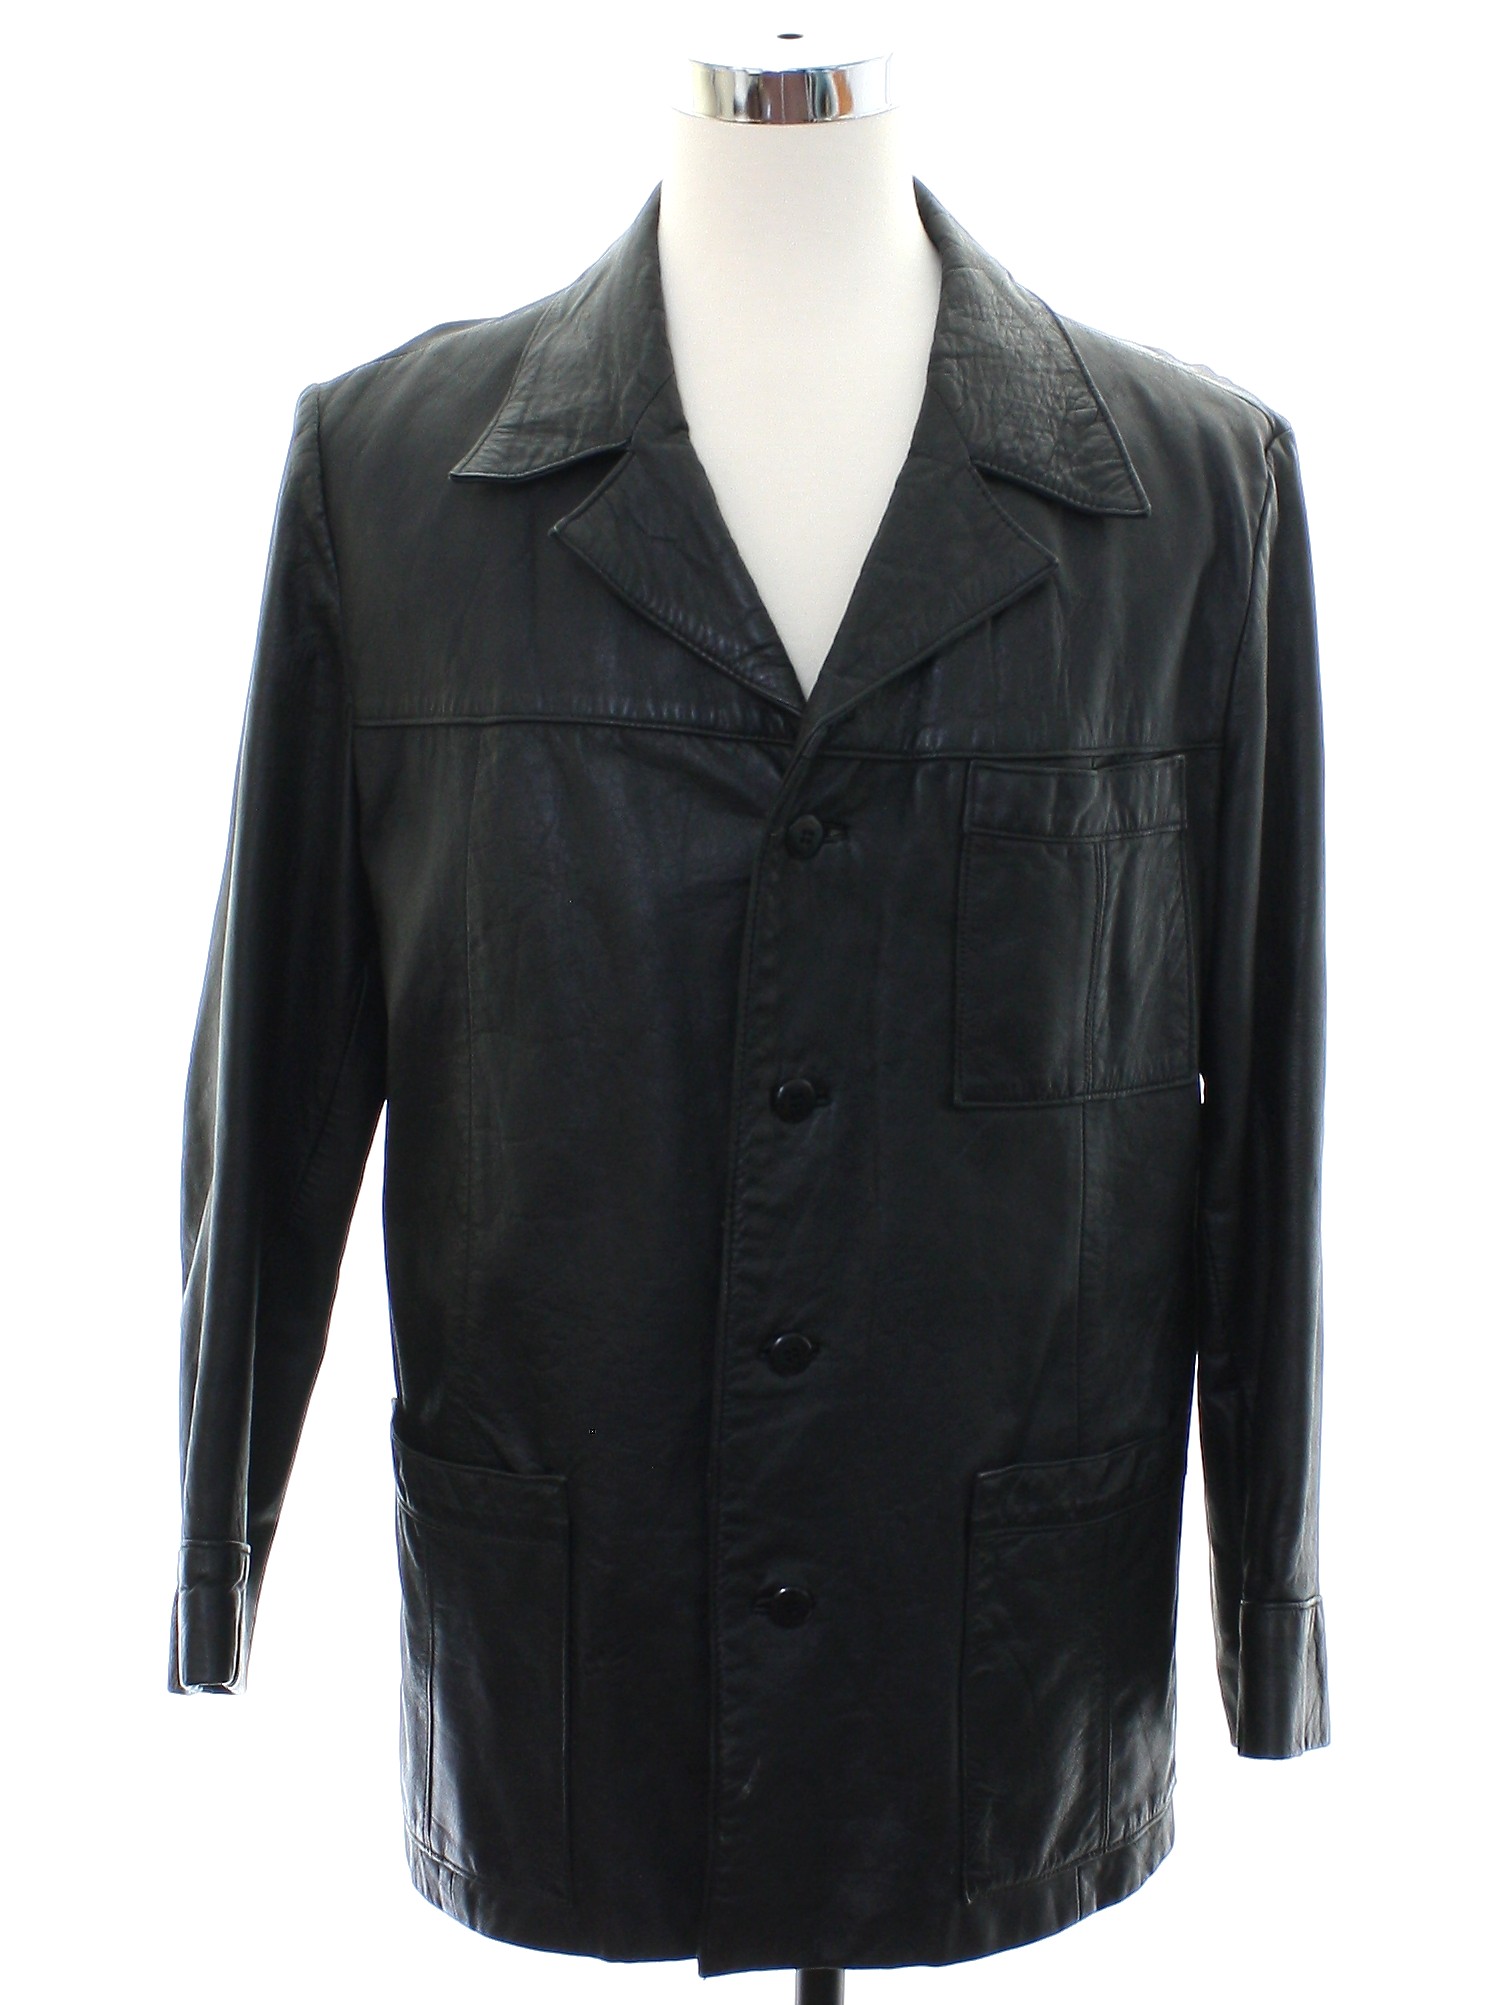 Retro 1980s Leather Jacket: 80s -Echtes Leder- Mens black leather